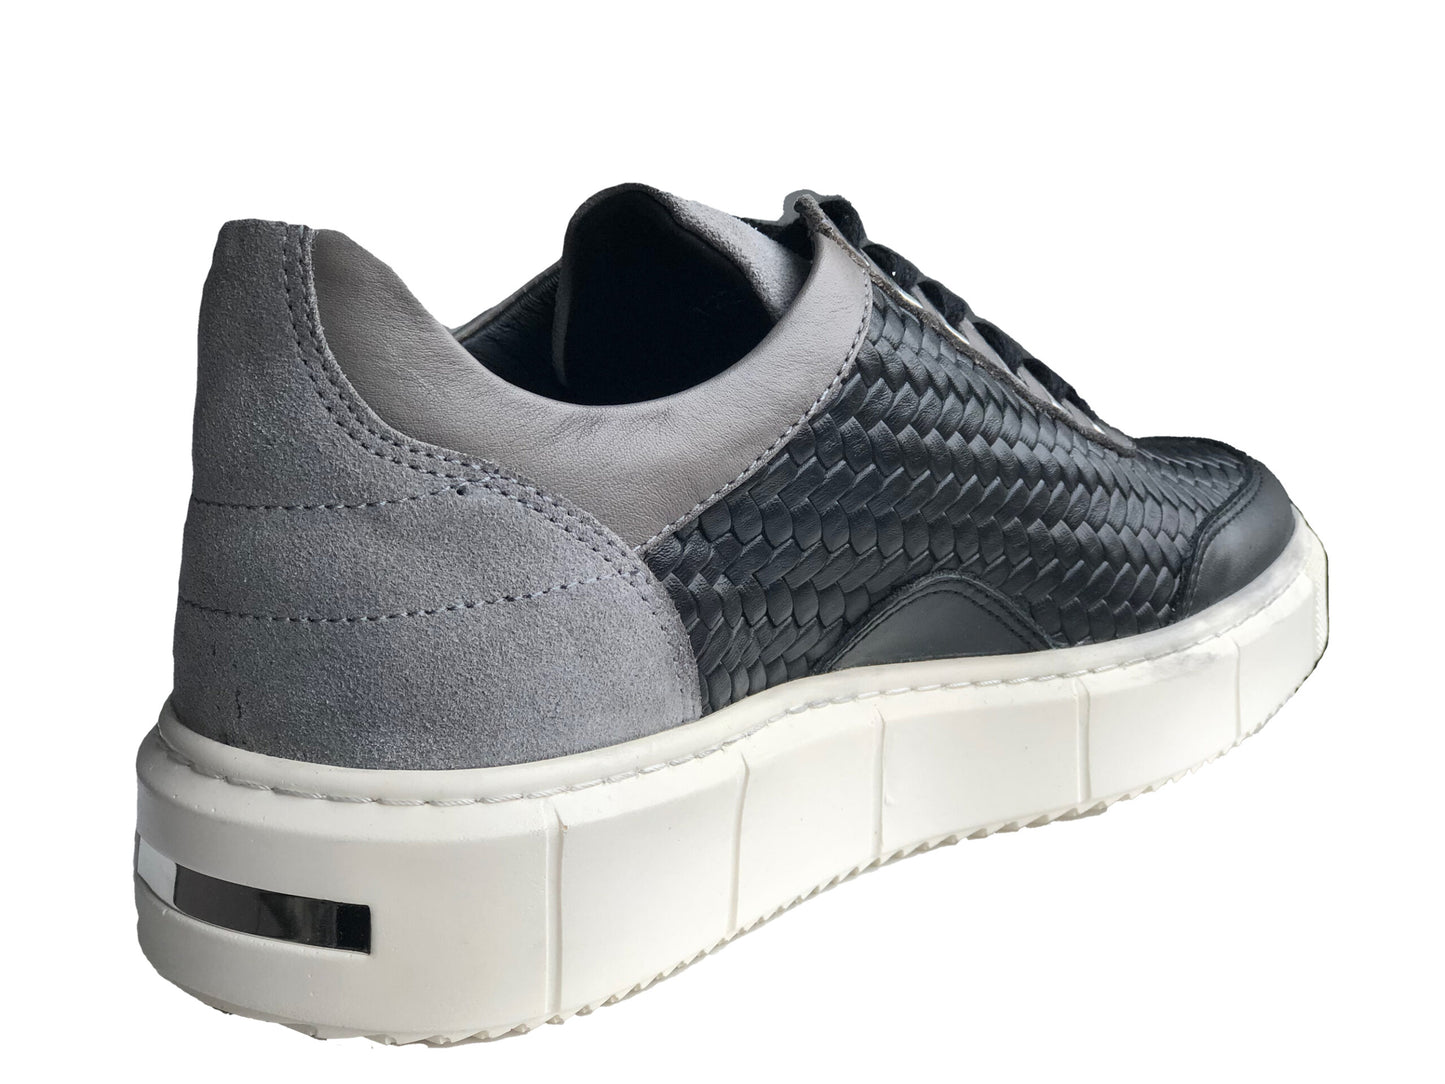 Casual, Handmade, Genuine Leather Mens Shoes 12237 Black/Grey